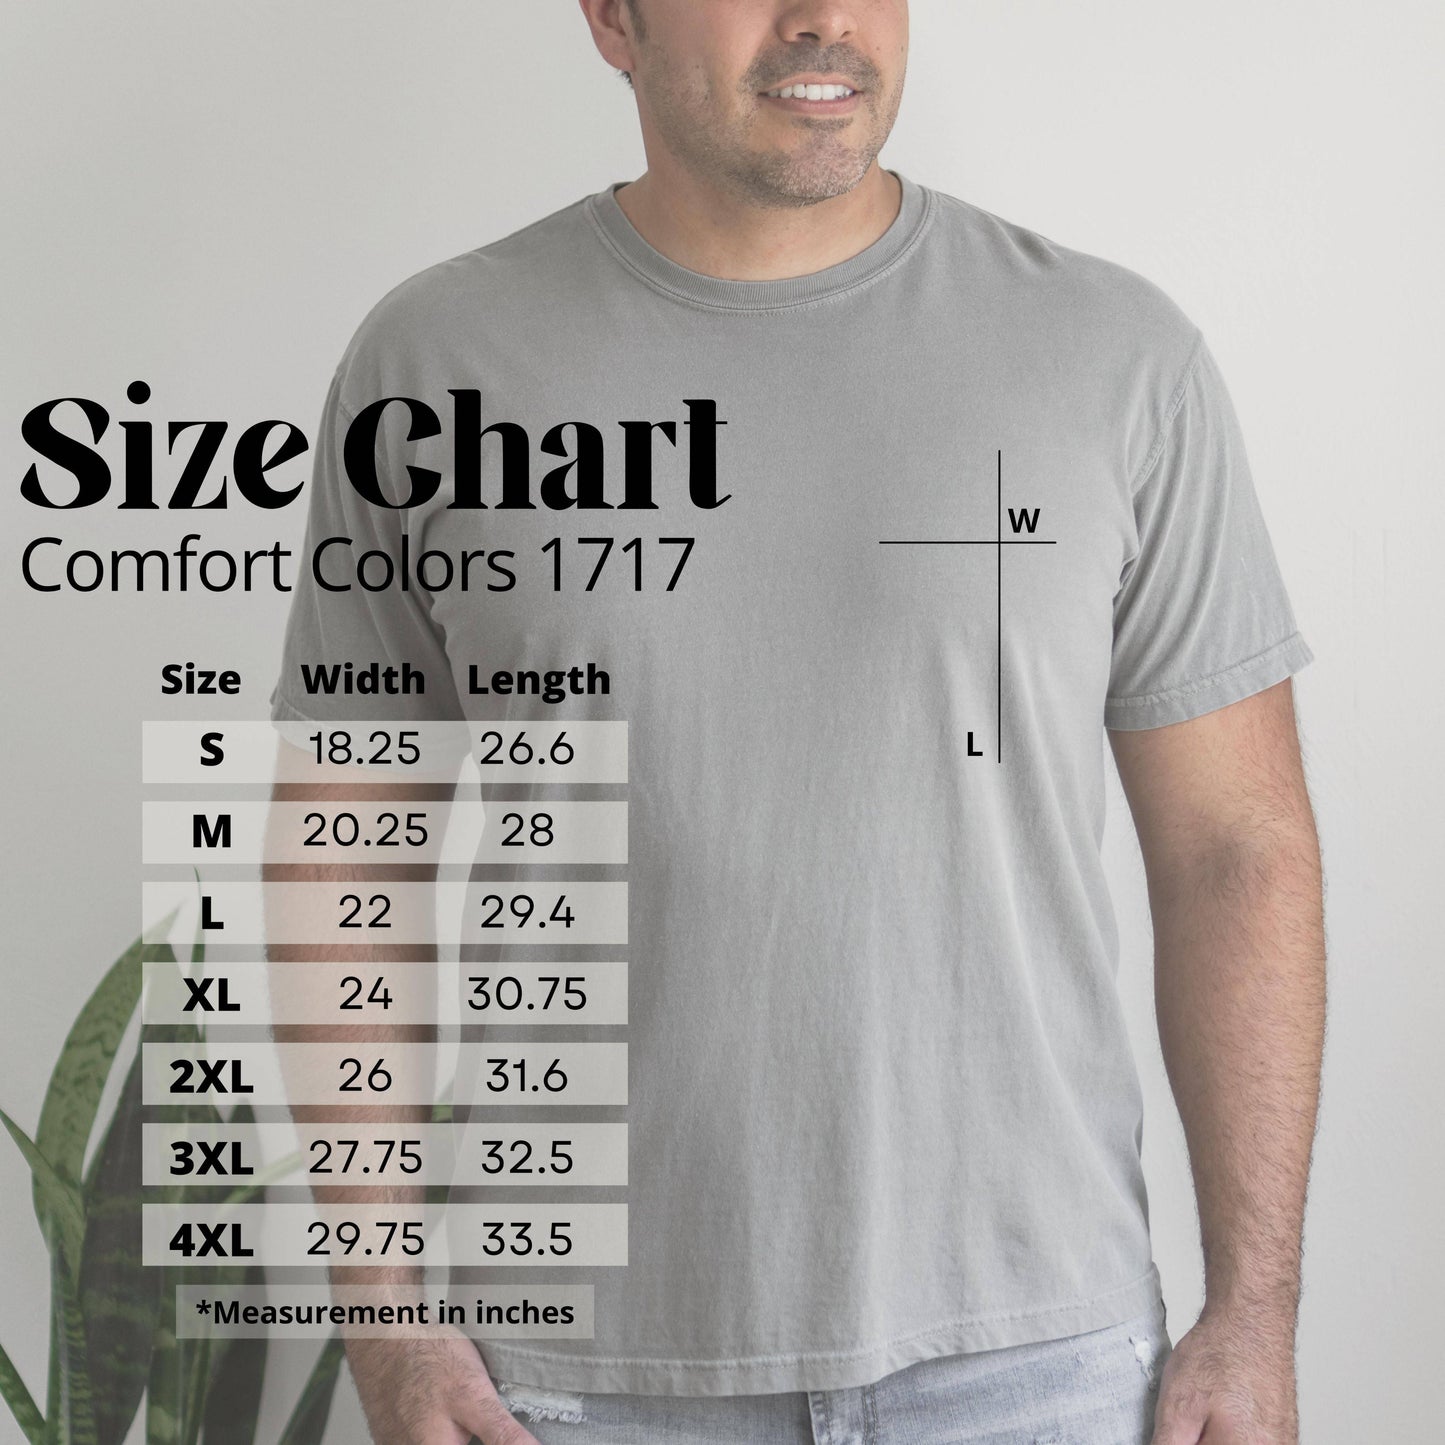 Homeschool Dad Checklist T-shirt Funny Trendy Gift